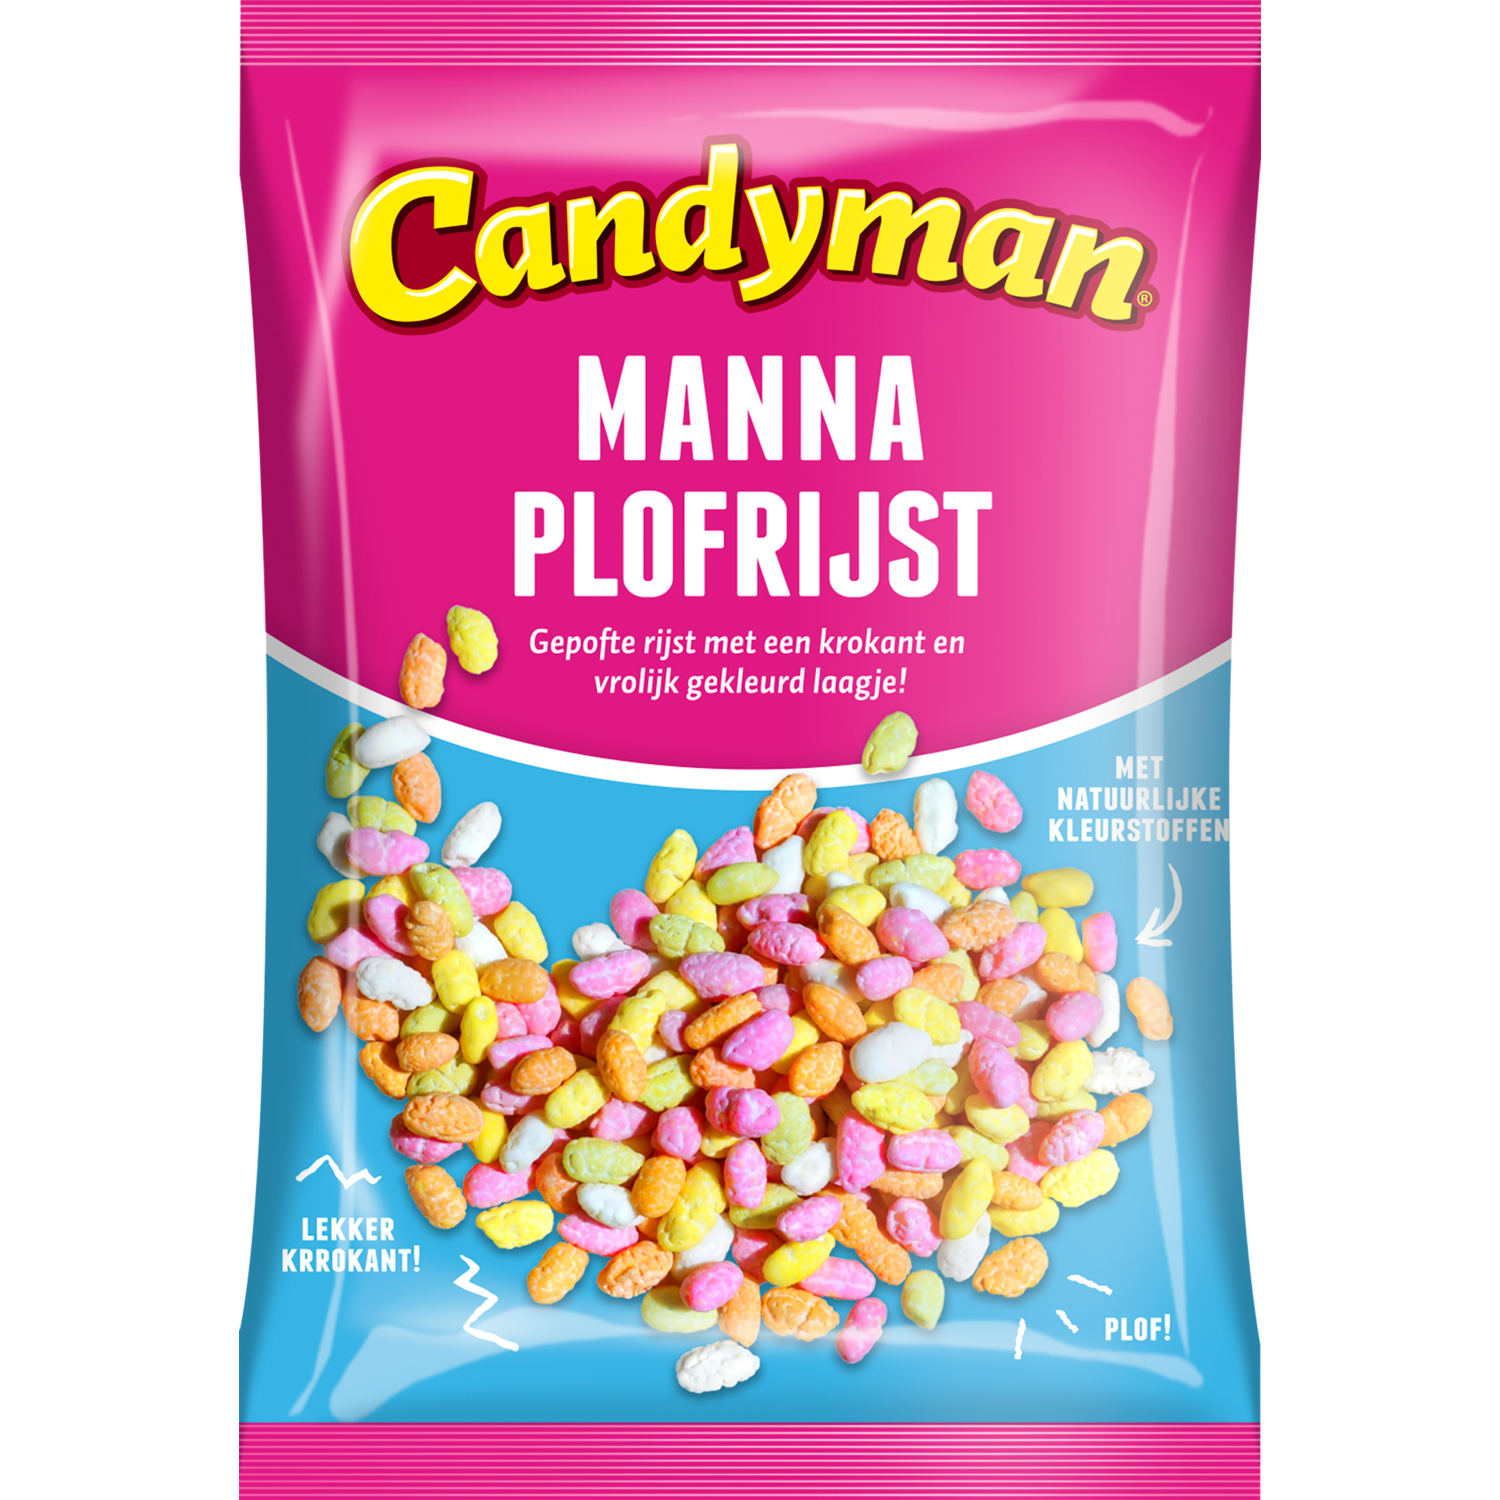 Candyman Manna plofrijst DekaMarkt